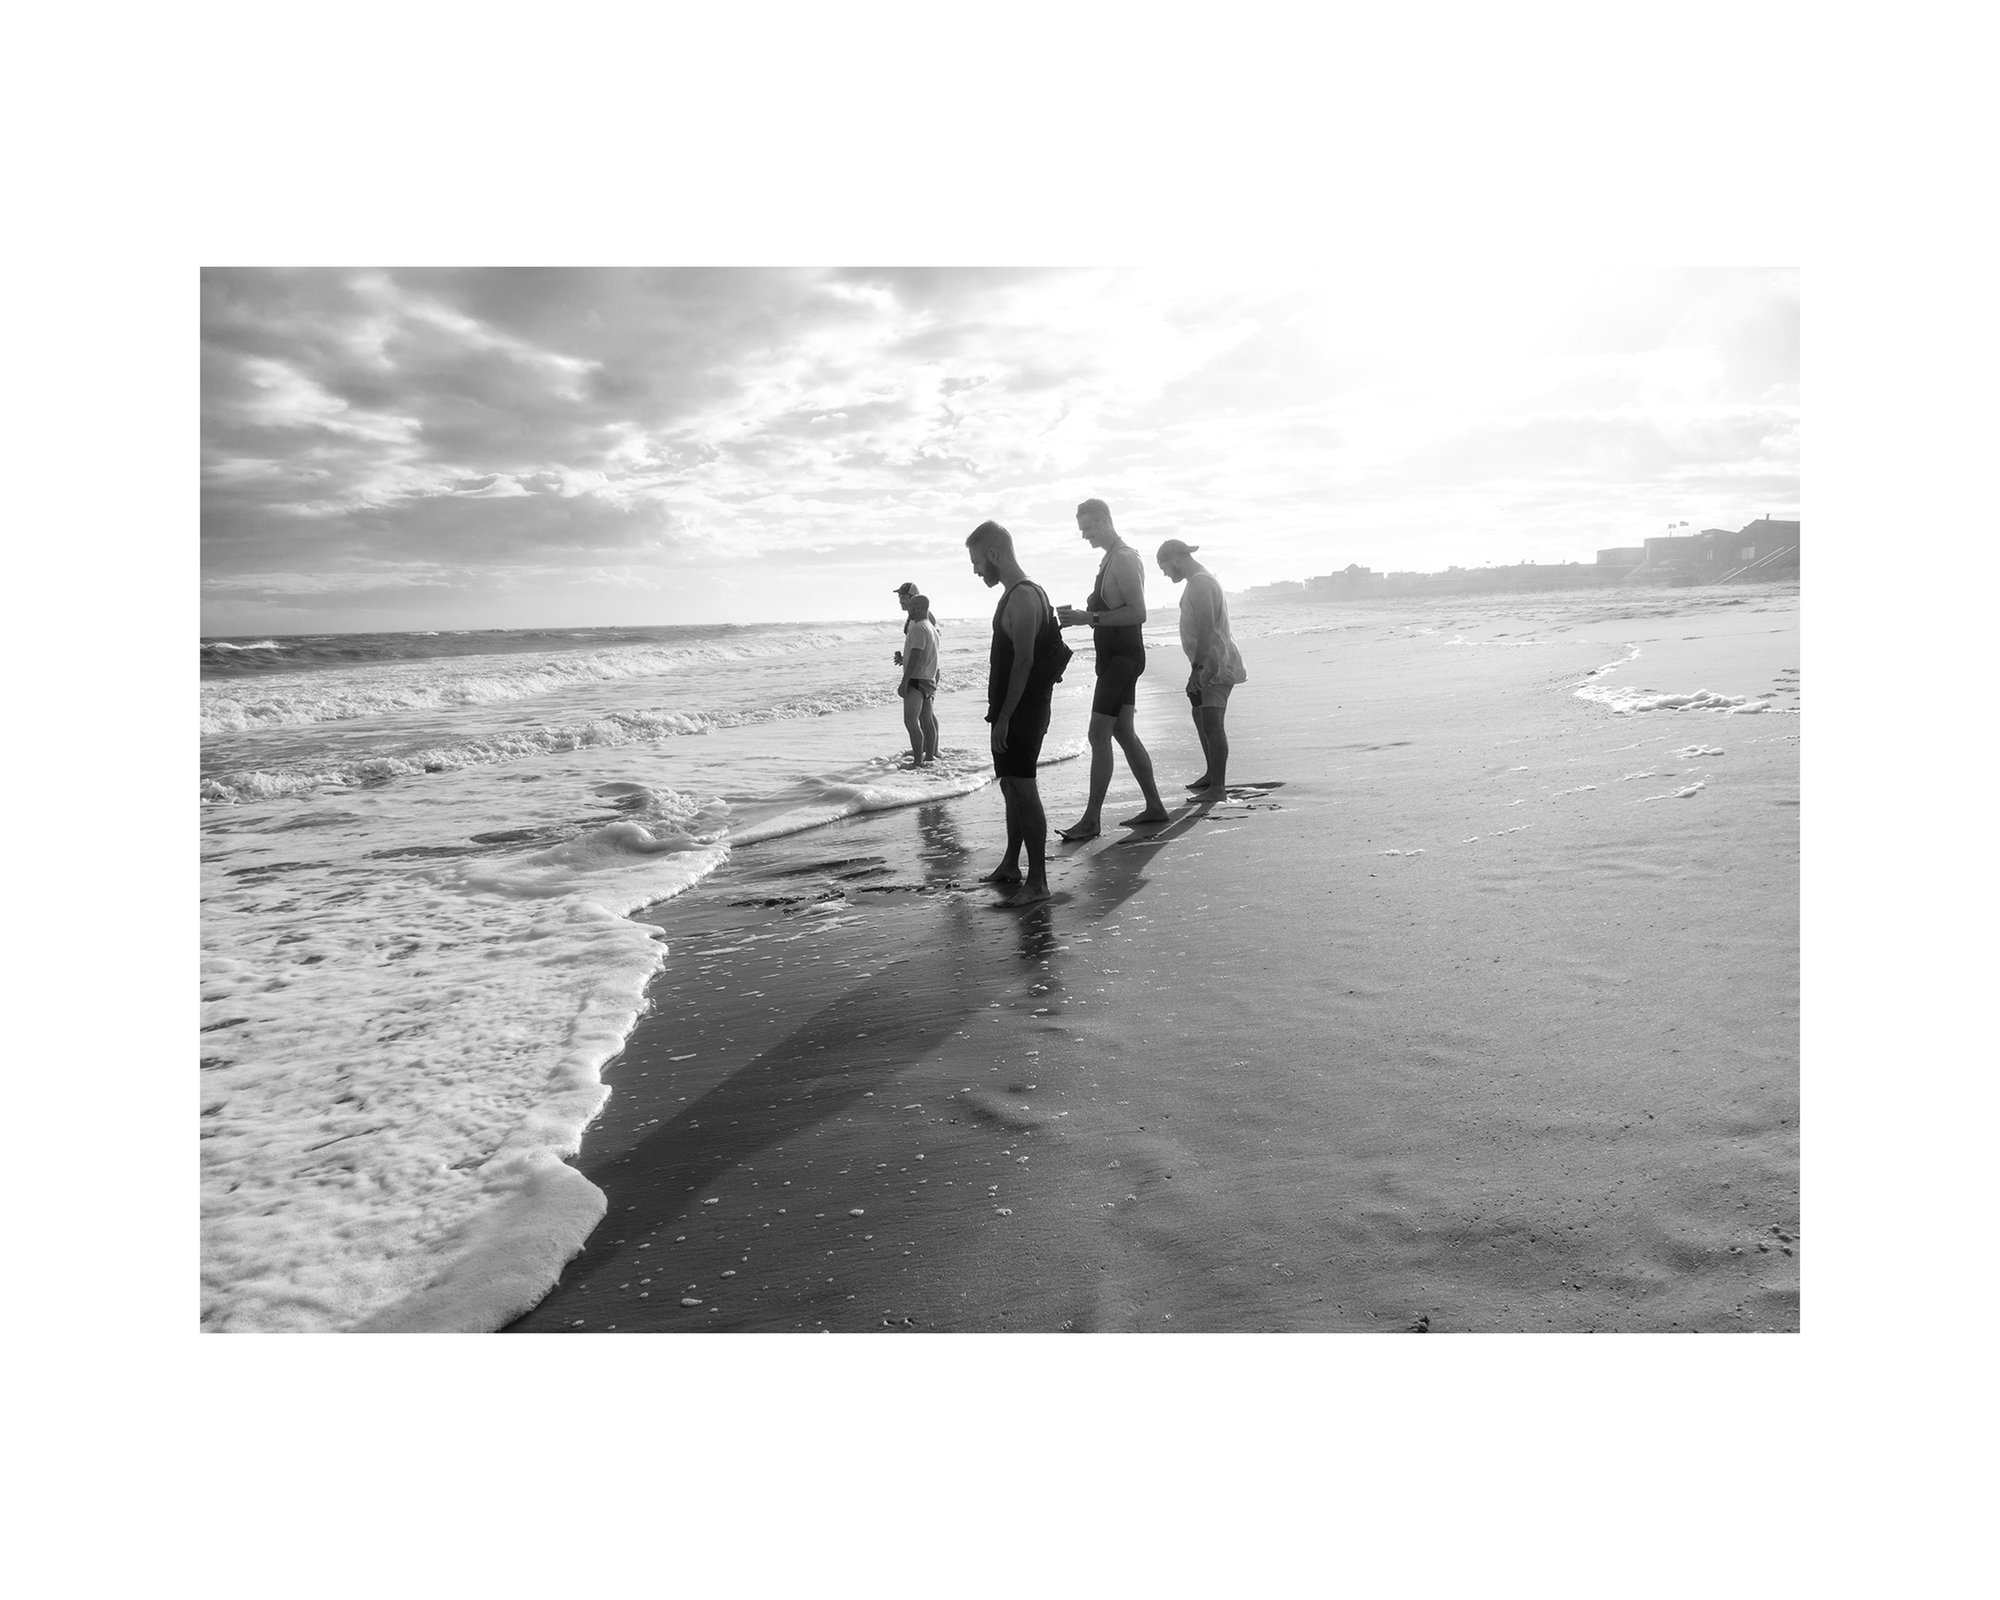   On the Beach (Ryan, Michael, Patrick, Peter, Brandon), Fire Island, 08.23.21  